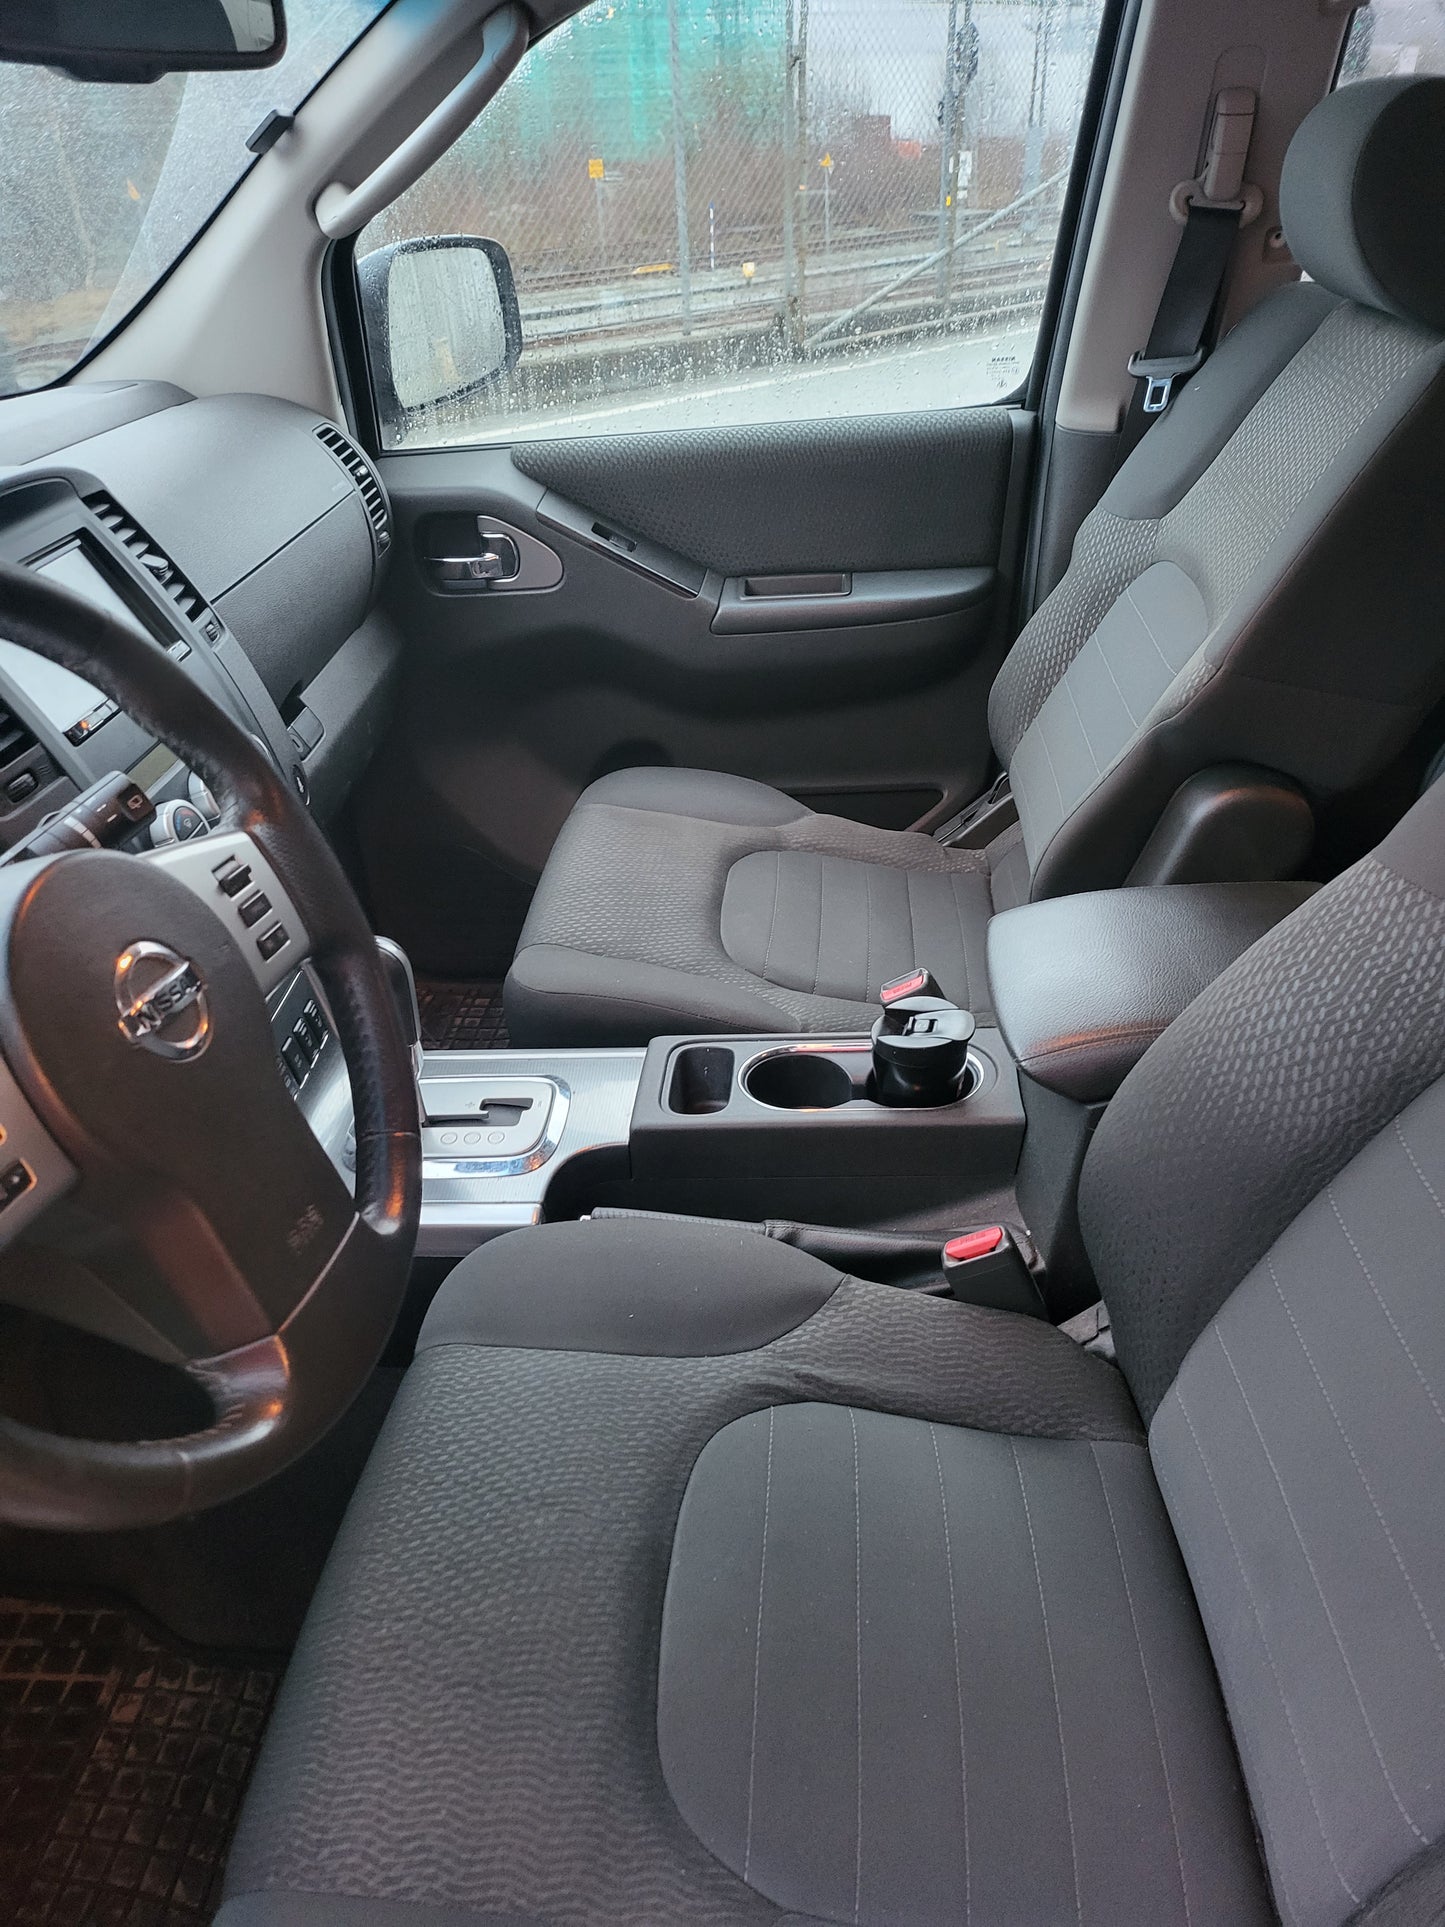 Nissan Pathfinder 2011 modell 2.5 Diesel automat 190 hk